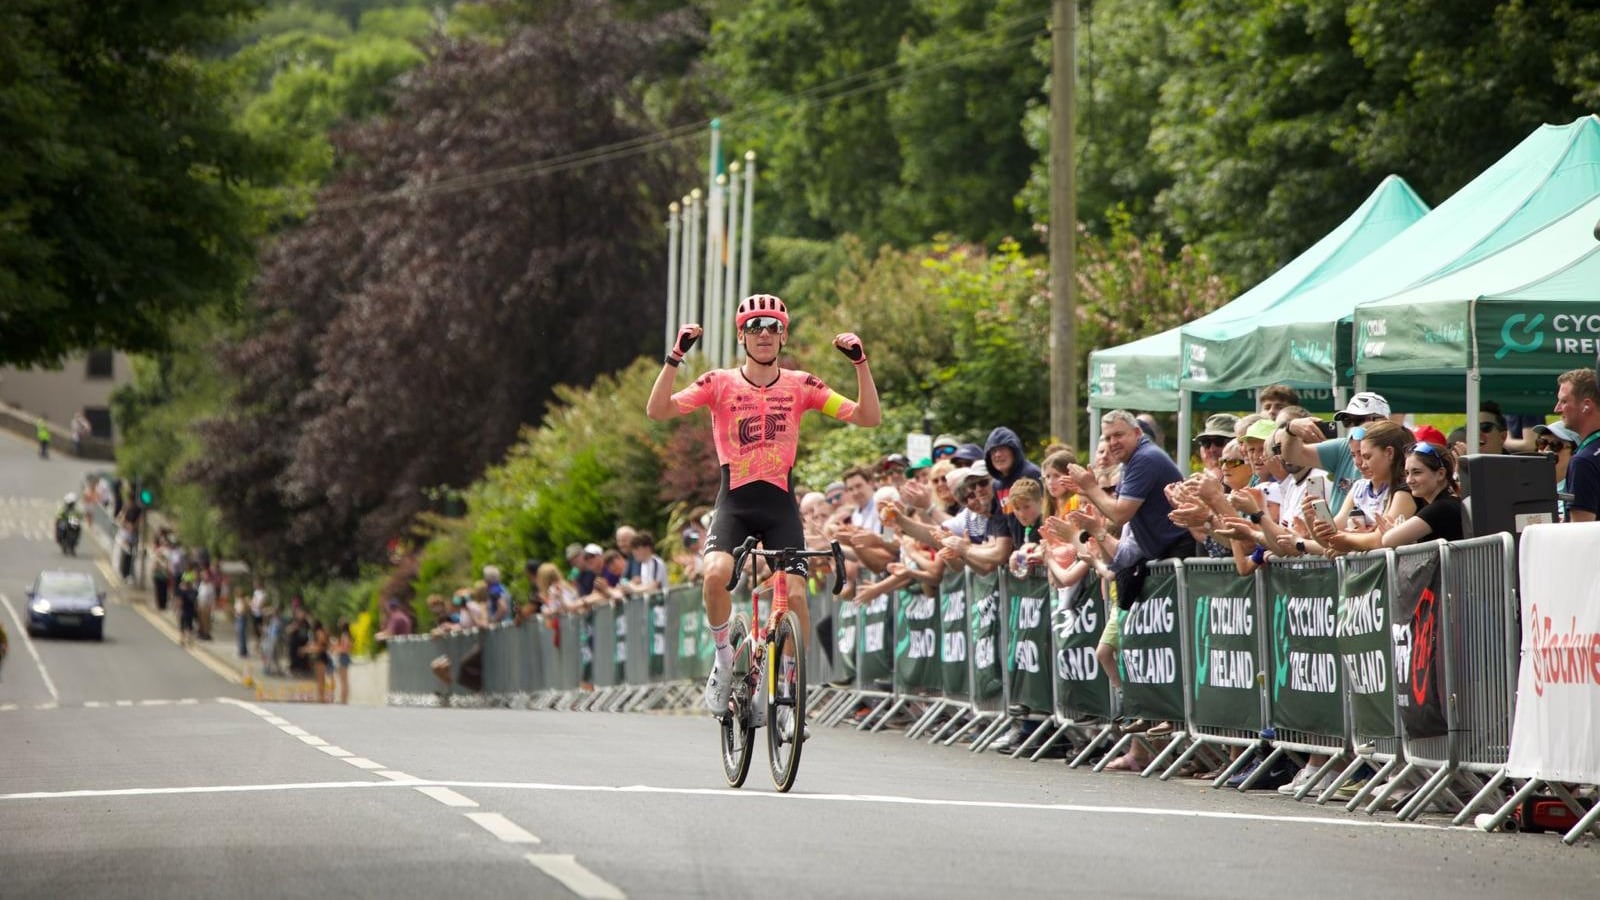 Darren Rafferty celebrates winning the Irish National Road Race